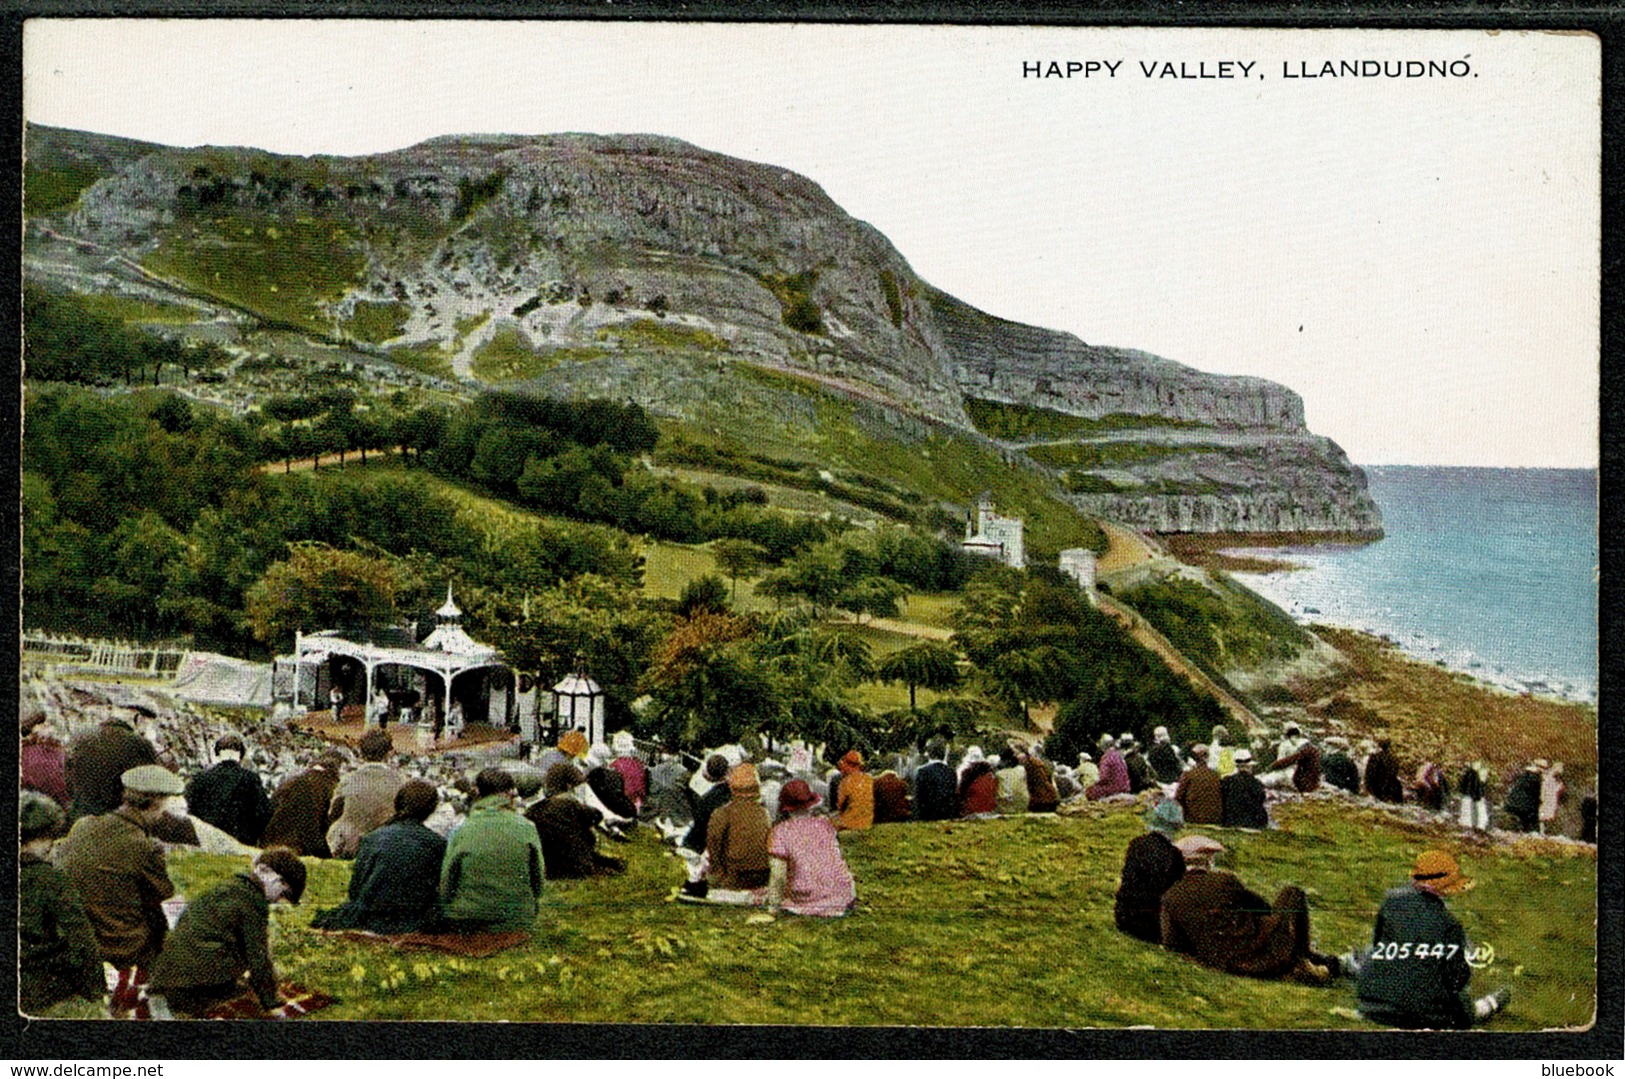 Ref 1293 - Early Coloured Postcard - Happy Valley Llandudno Caernarvonshire Wales - Caernarvonshire